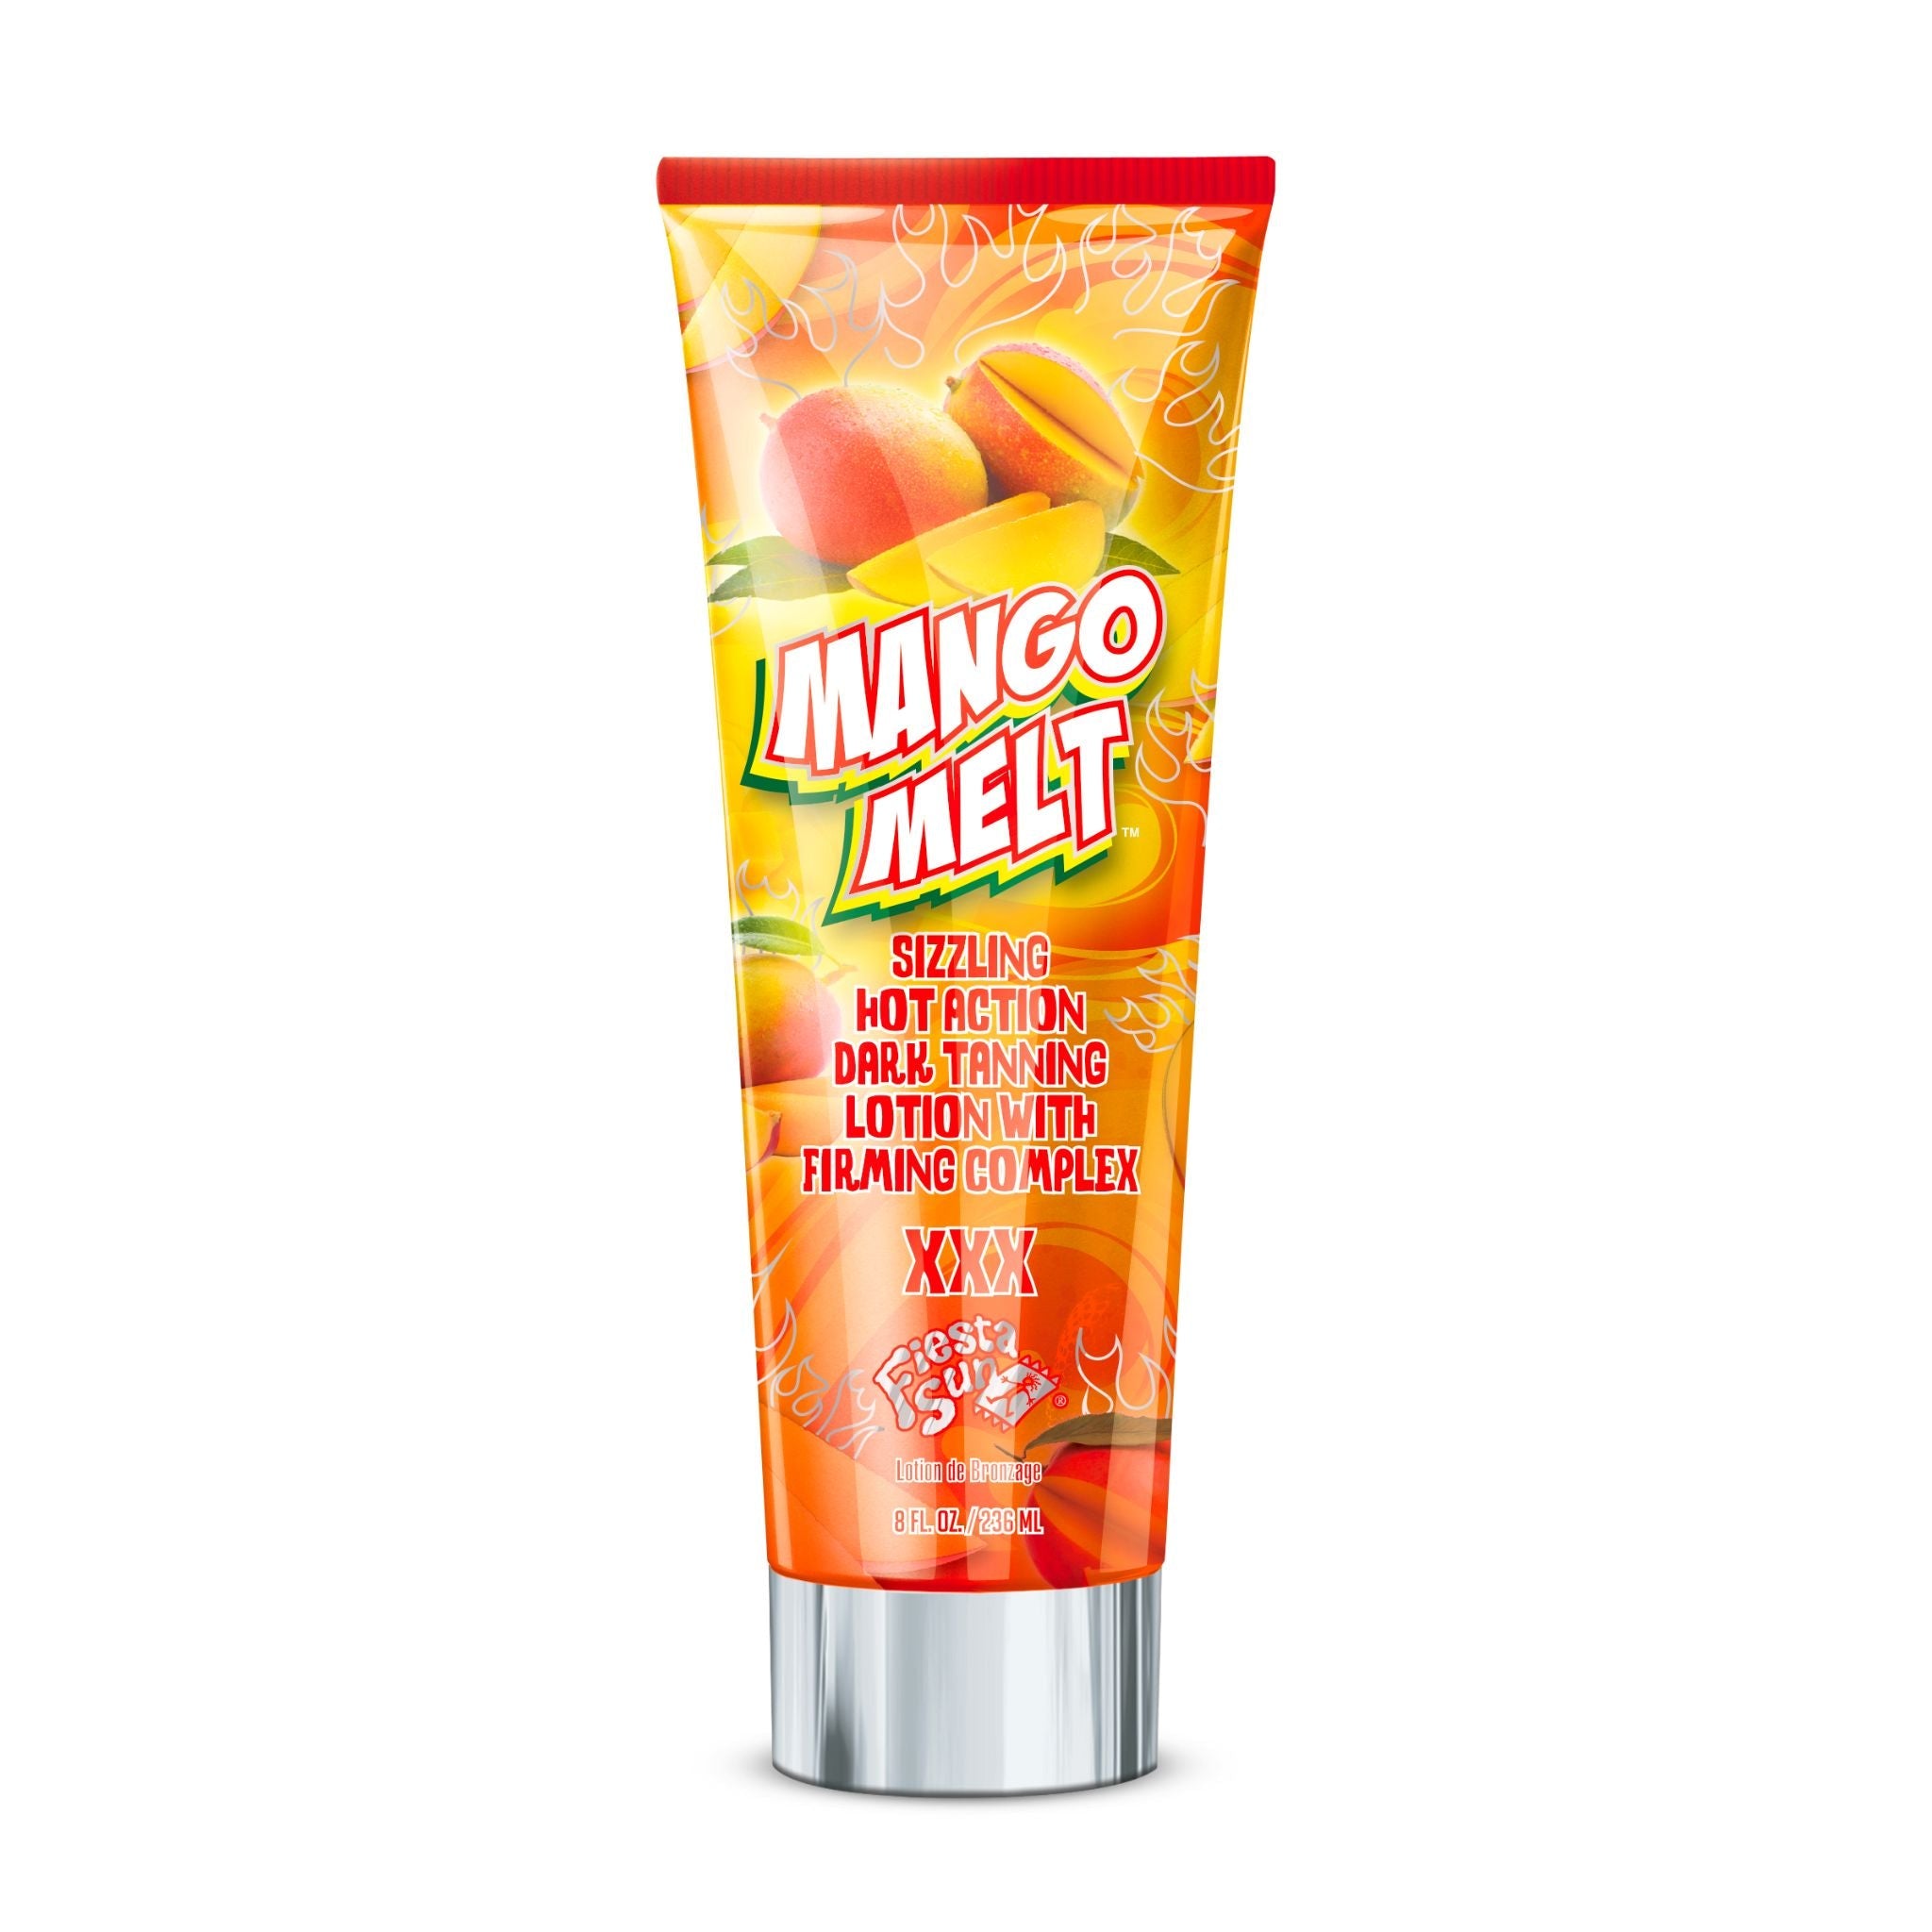 Fiesta Sun Mango Melt XXX Sizzling Hot Action Tanning Lotion Tanning Lotion